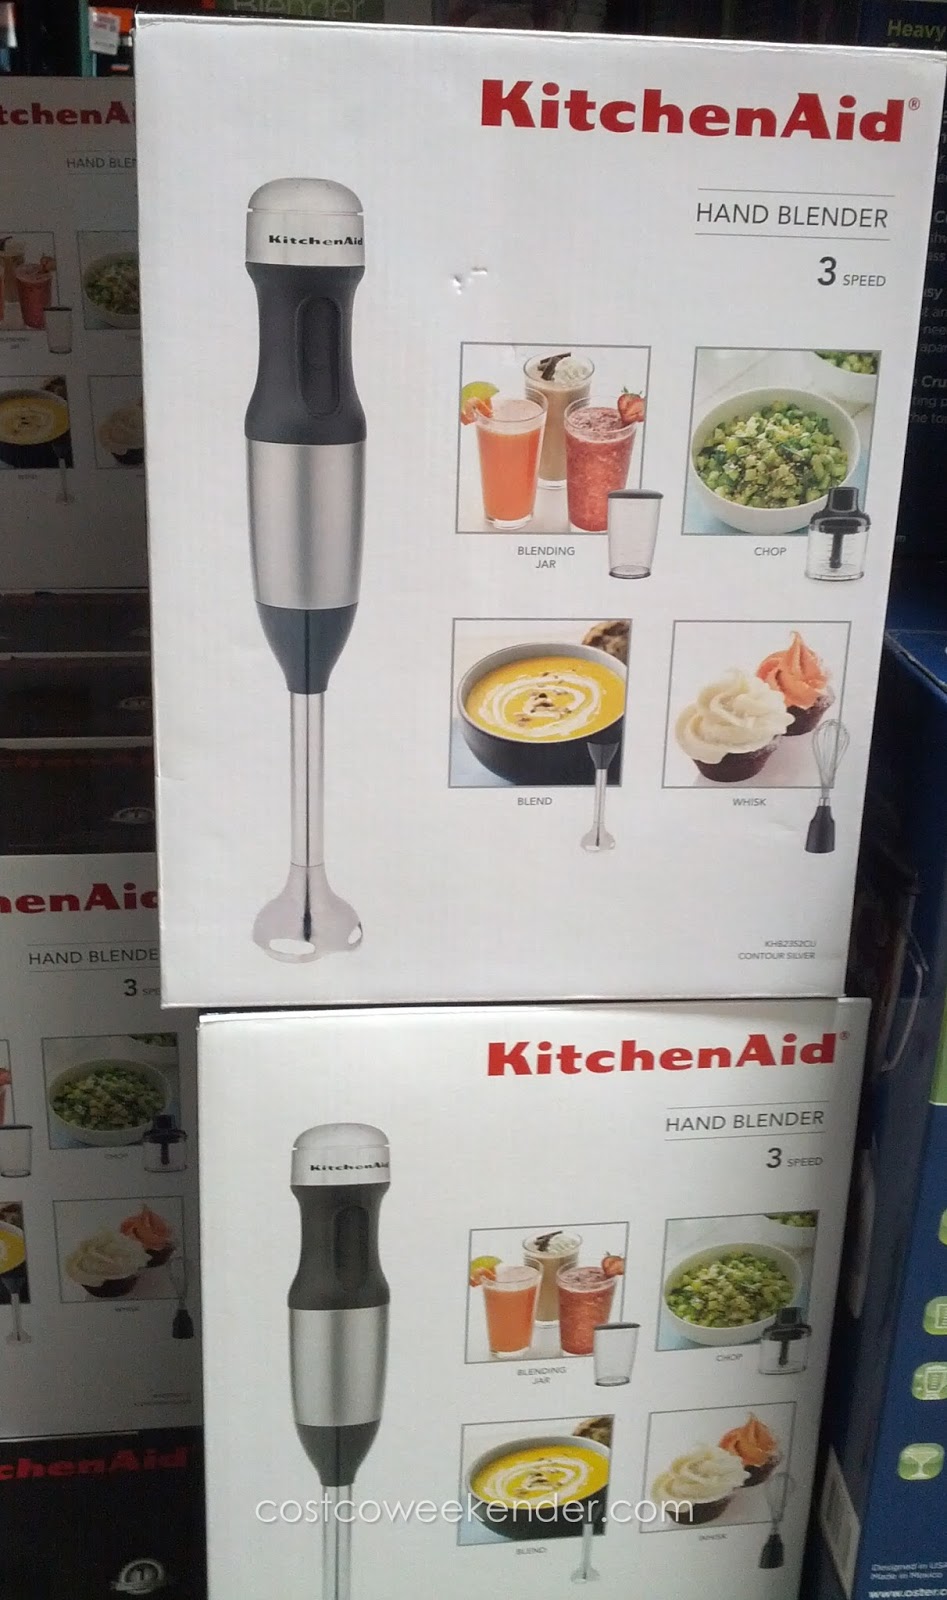 KitchenAid KHB2352CU 3 Blender (Contour | Costco Weekender